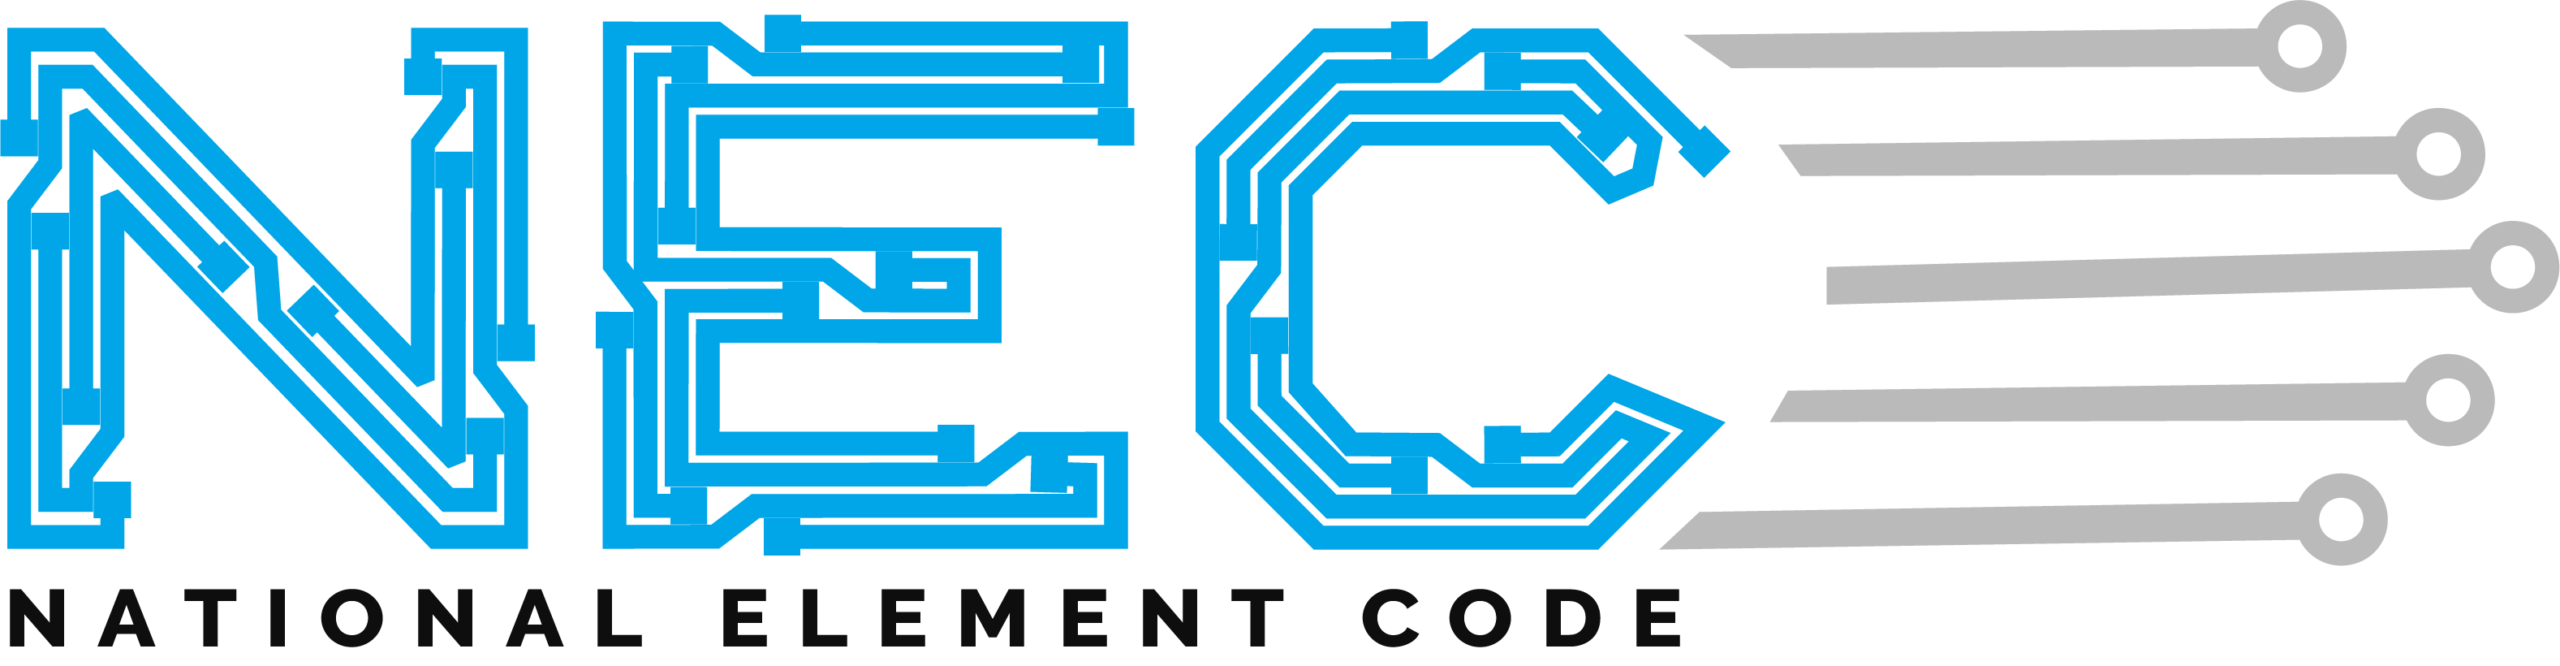 National Element Code 